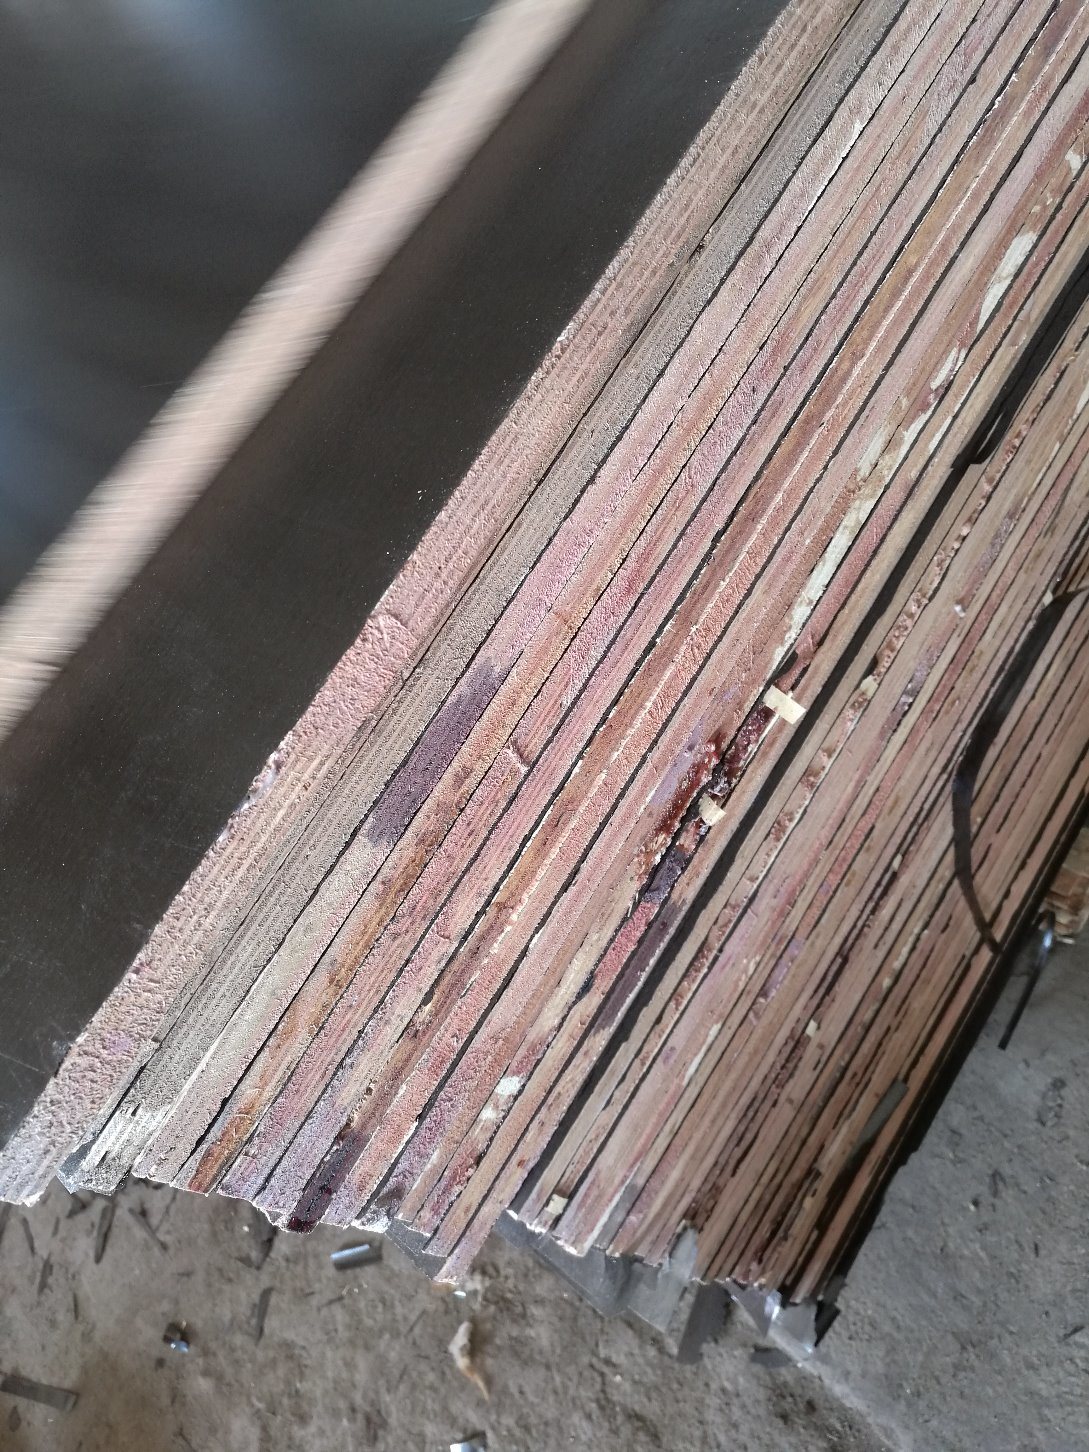 Hardwood Core Marine Plywood WBP Glue for Constructions